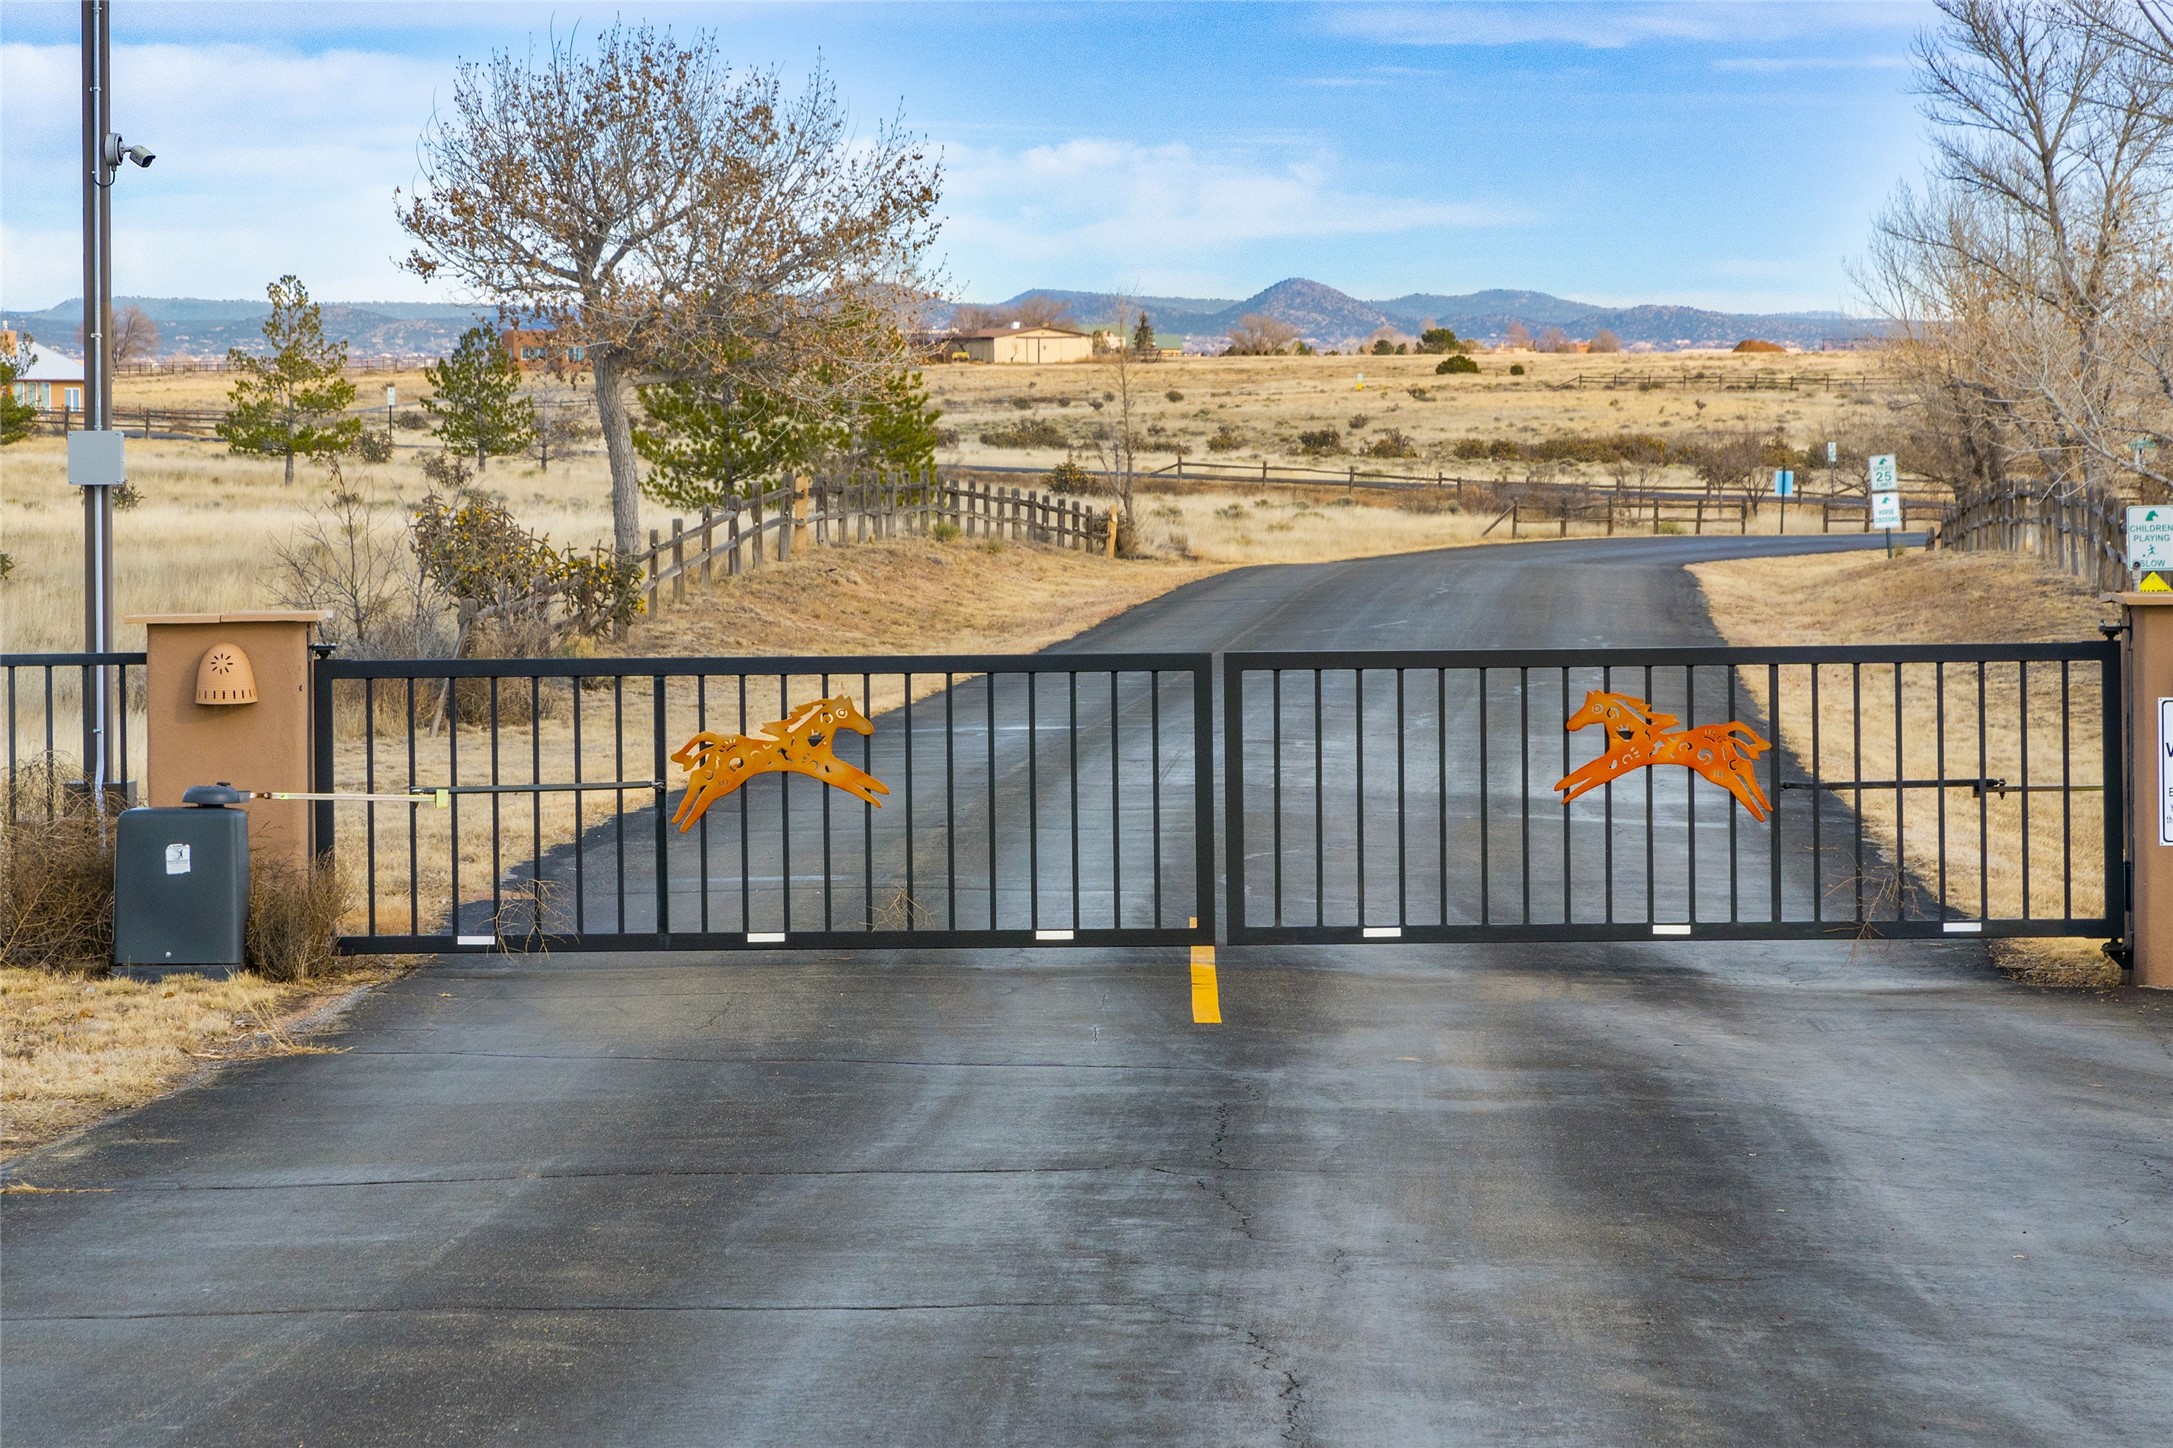 Gate into Rancho San Marcos neighborhood